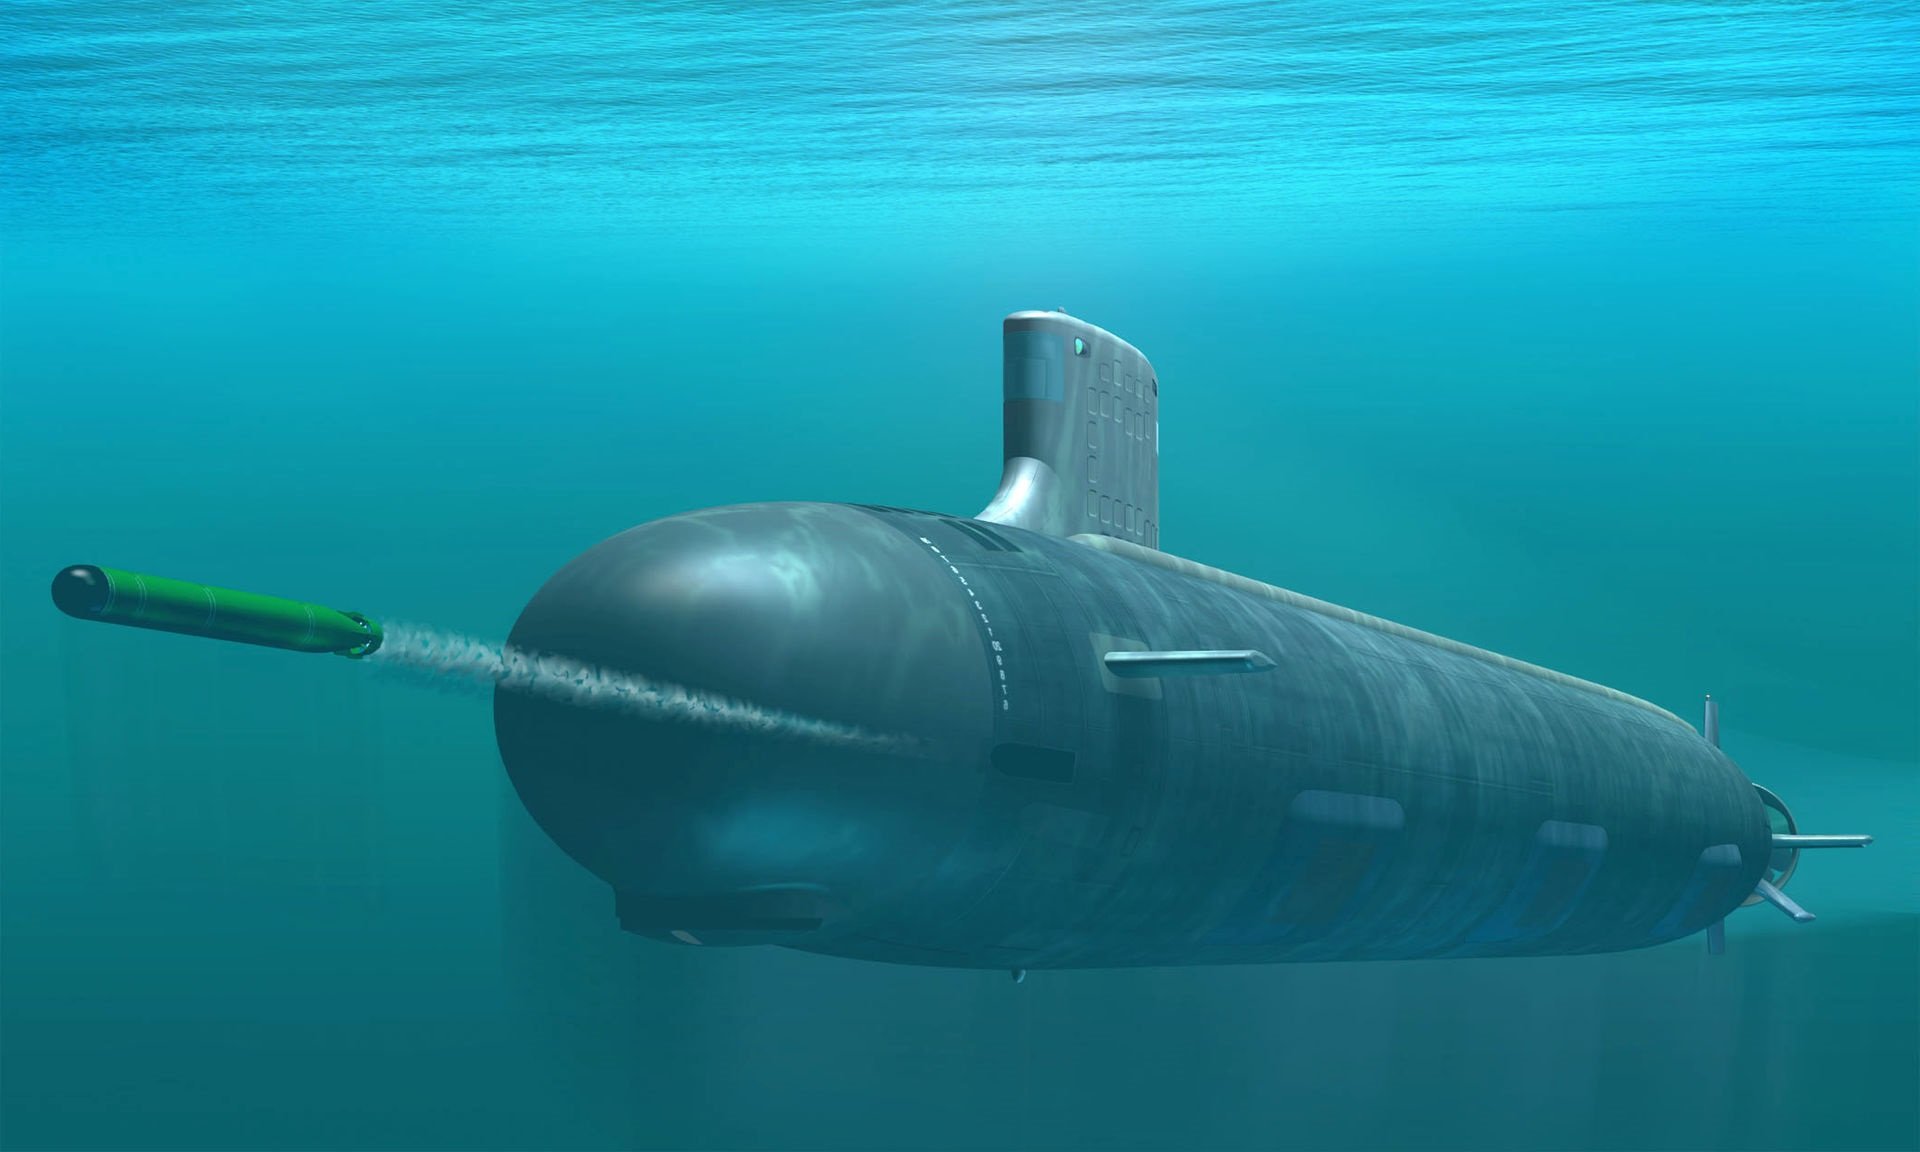 american seawolf class submarine